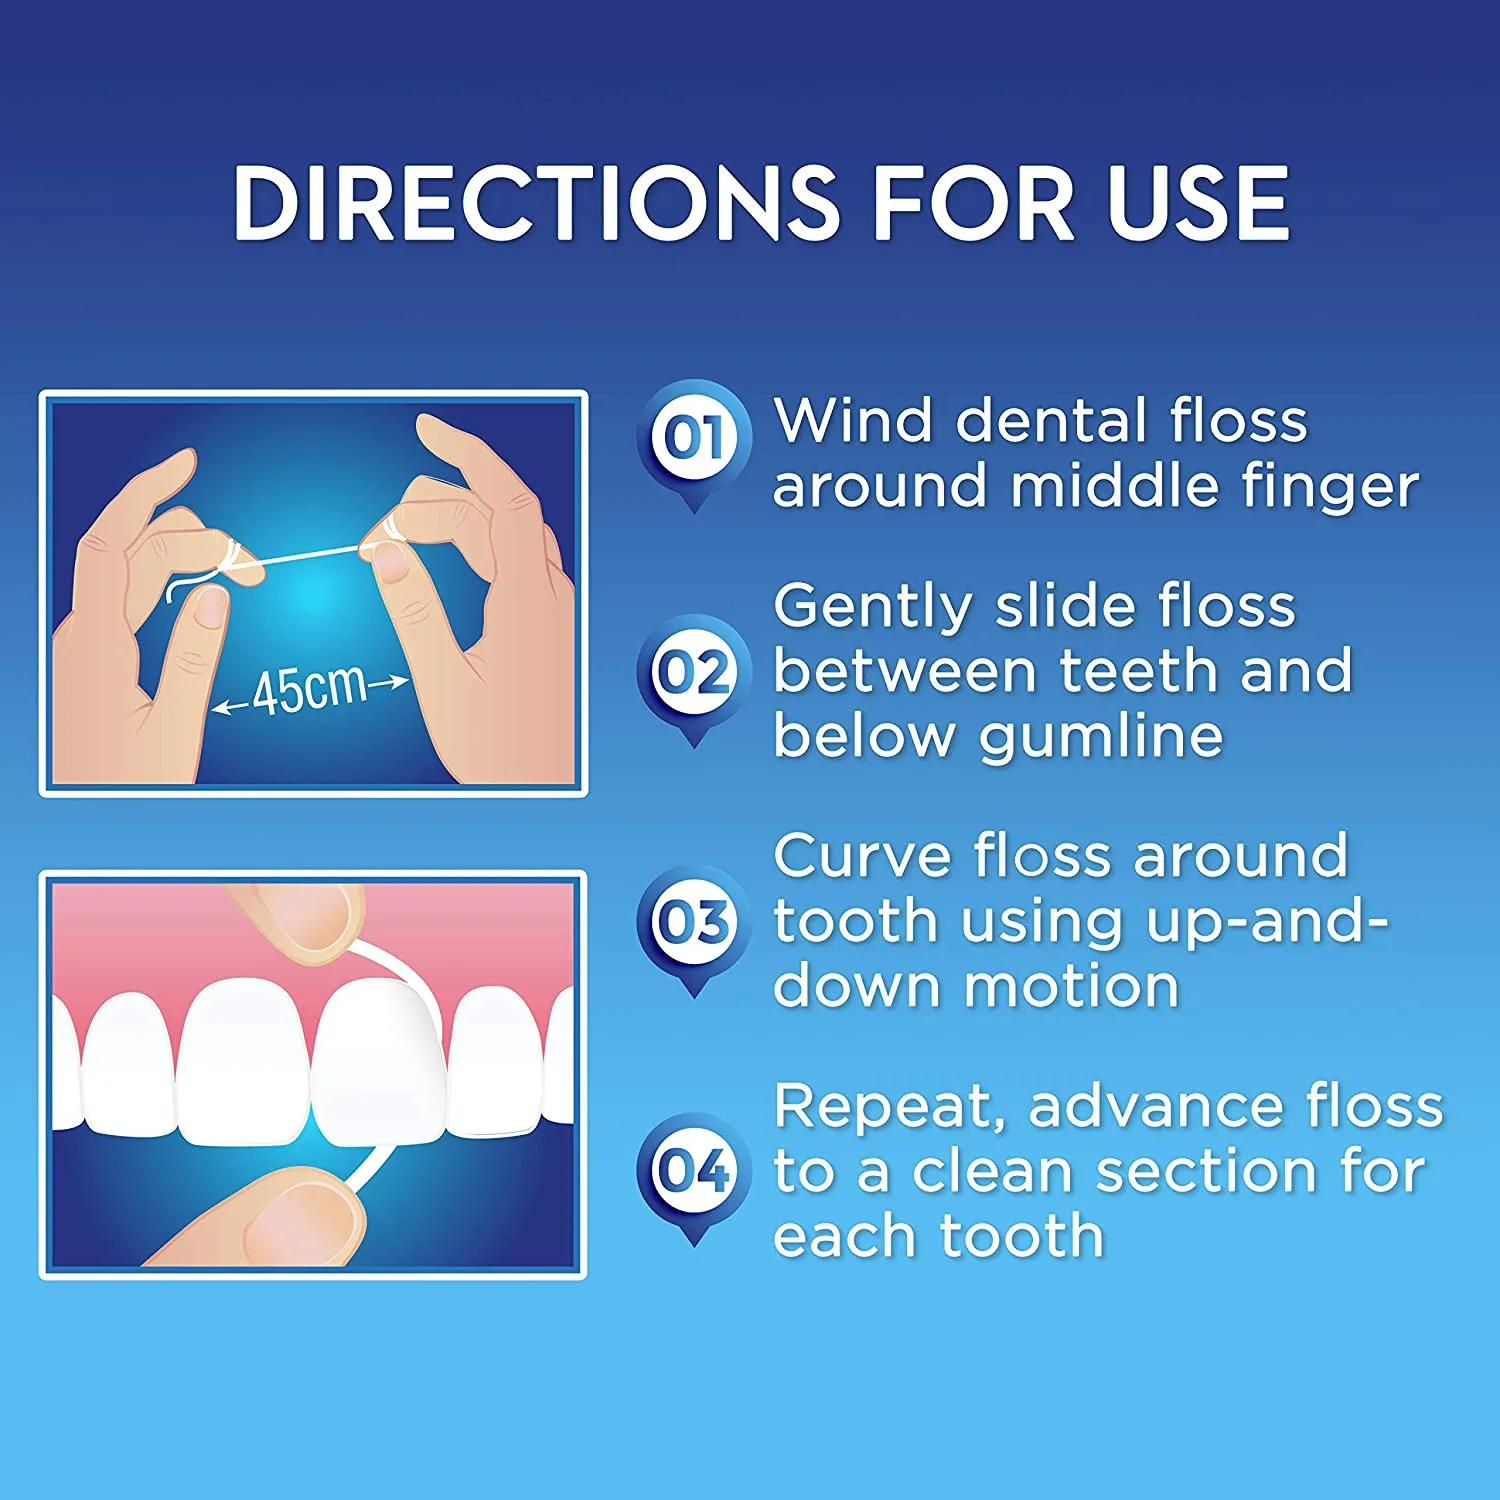 Essential Dental Floss Unwaxed 50